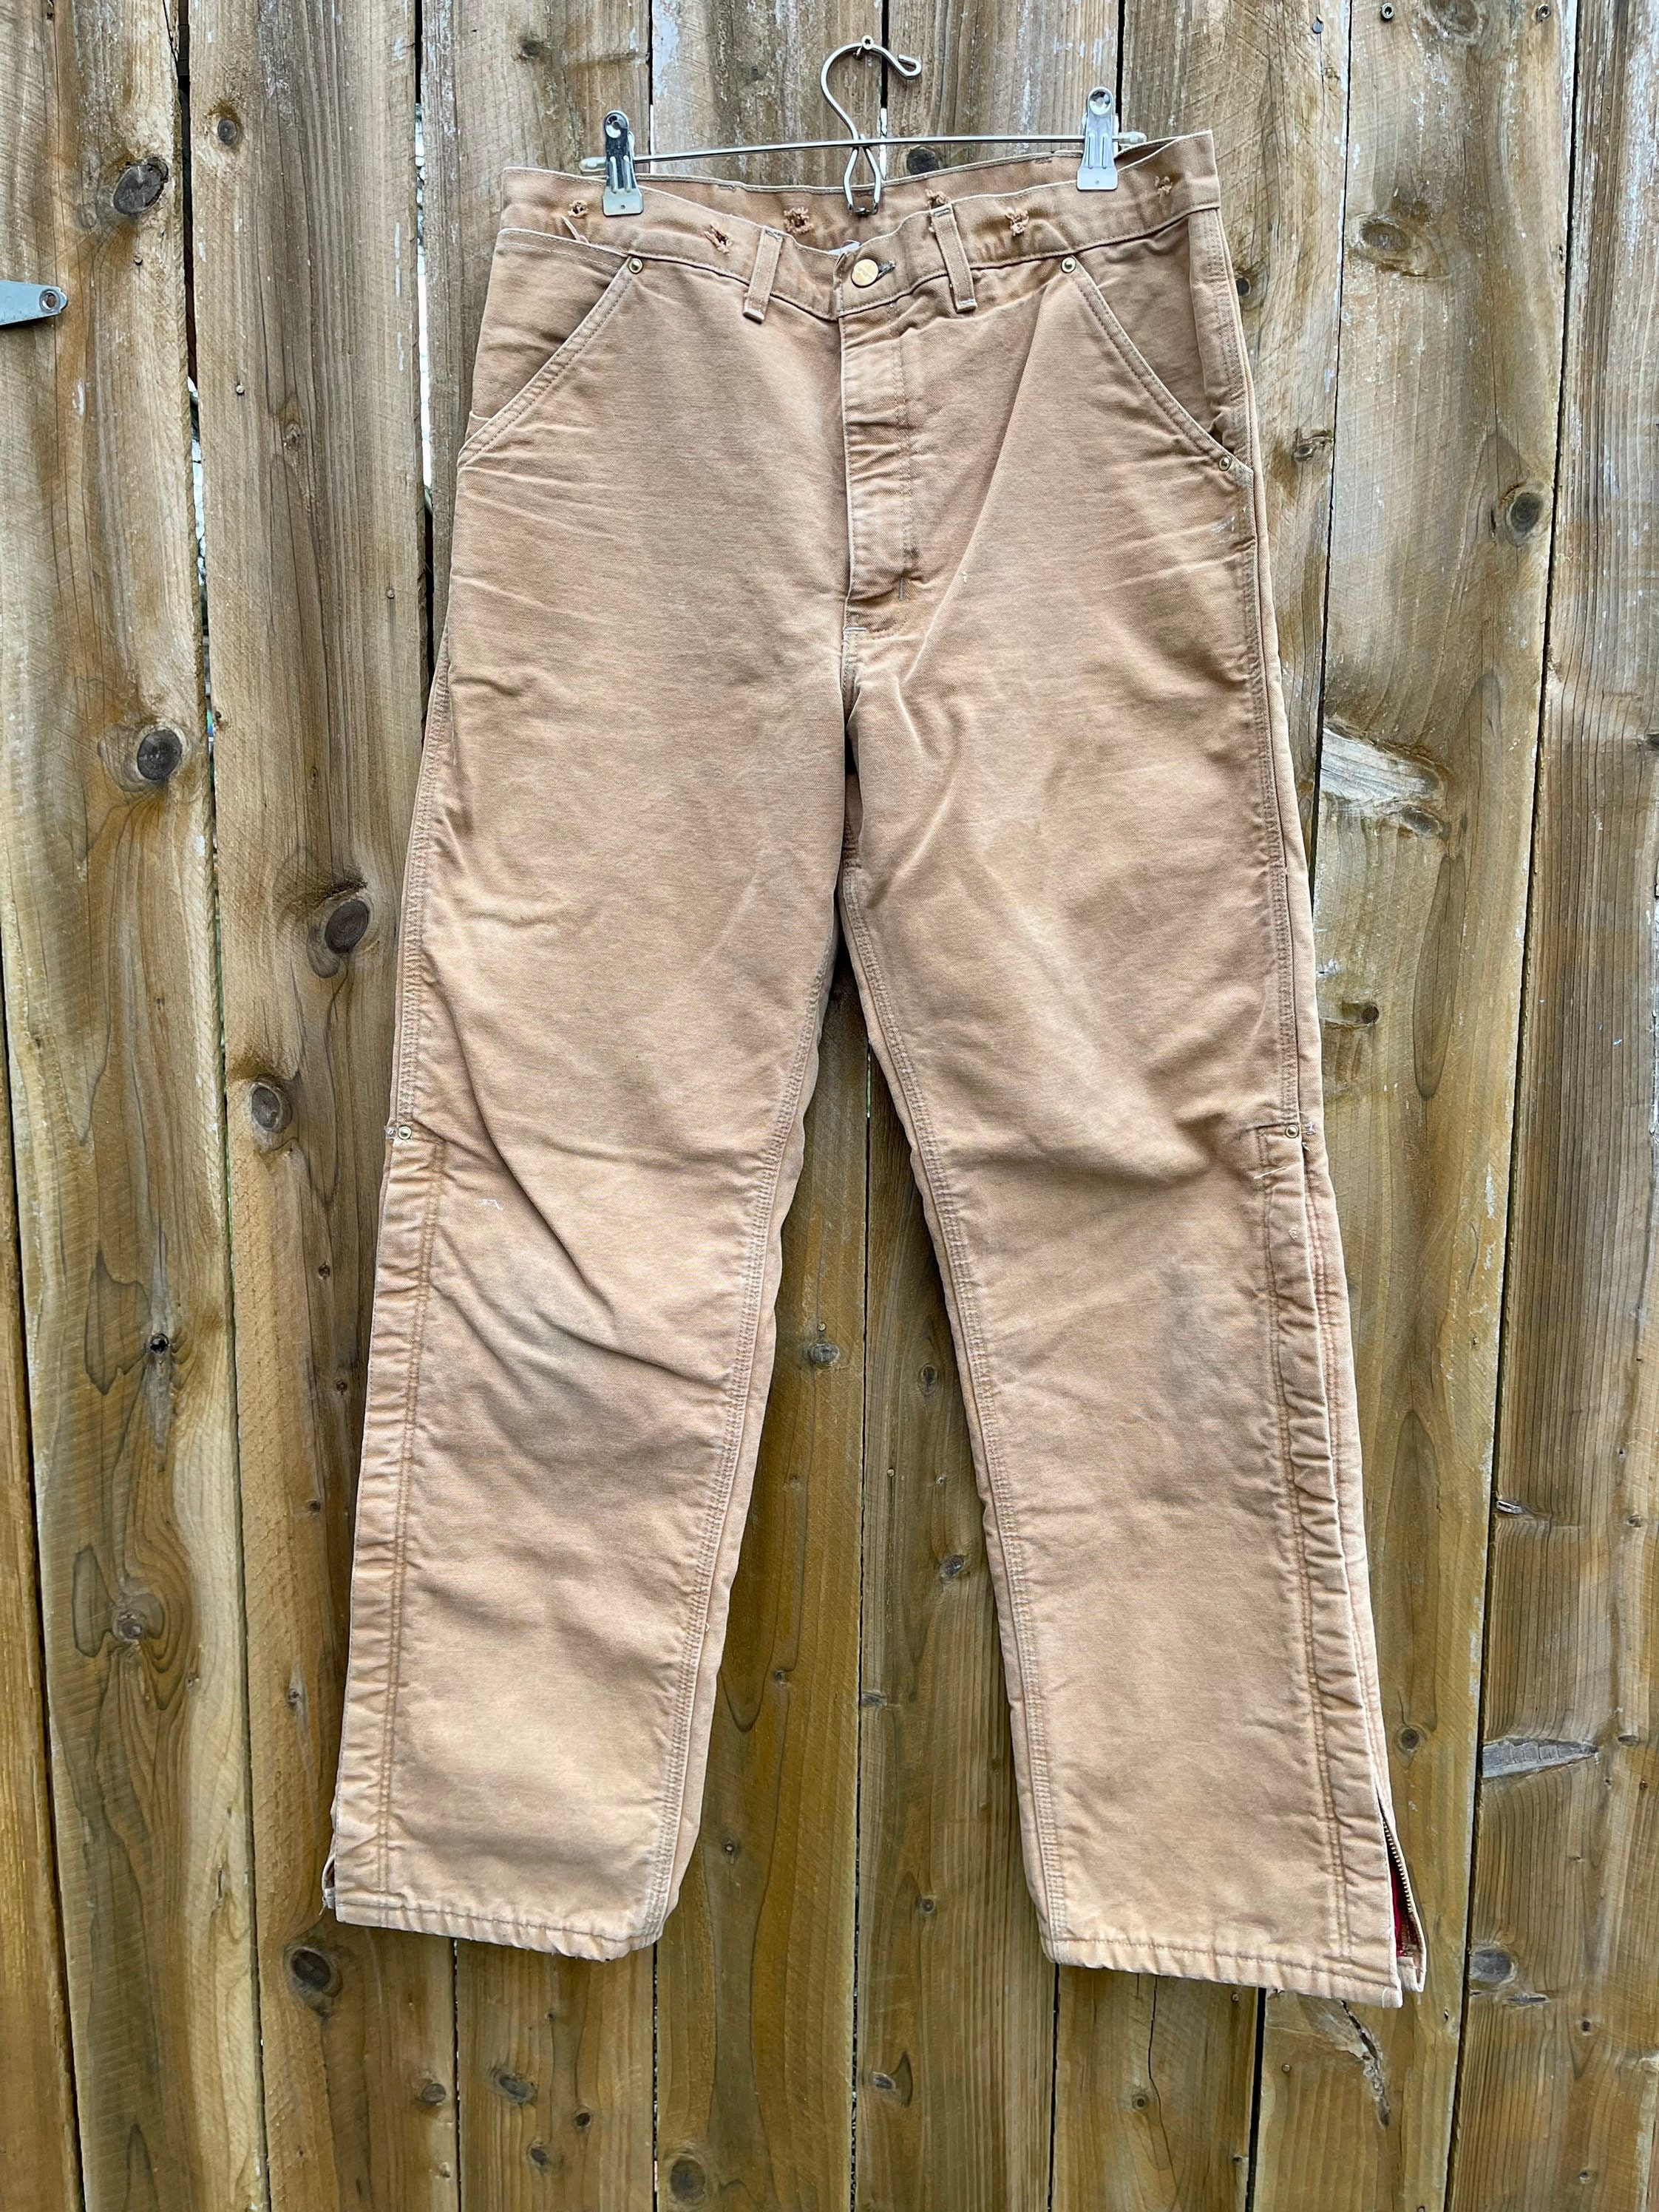 Used & Reworked Carhartt Mens Jeans & Work Pants